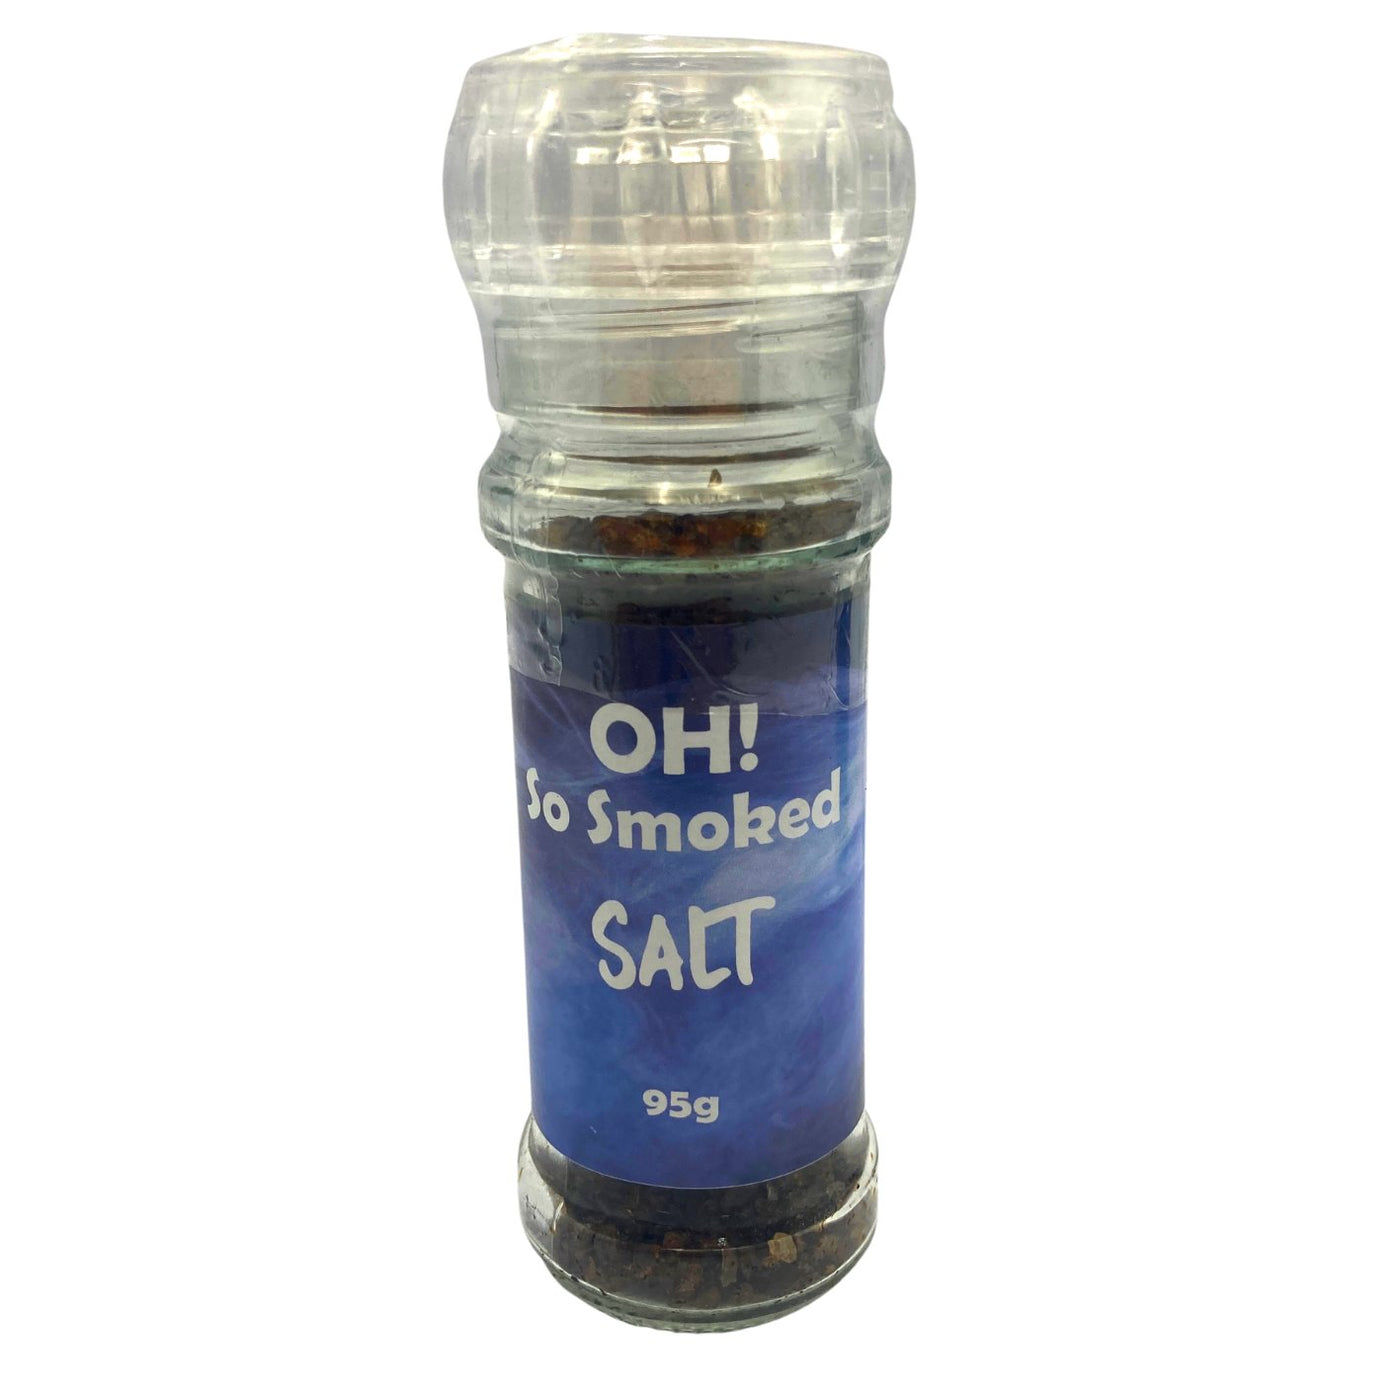 OH! So Smoked Salt 95g